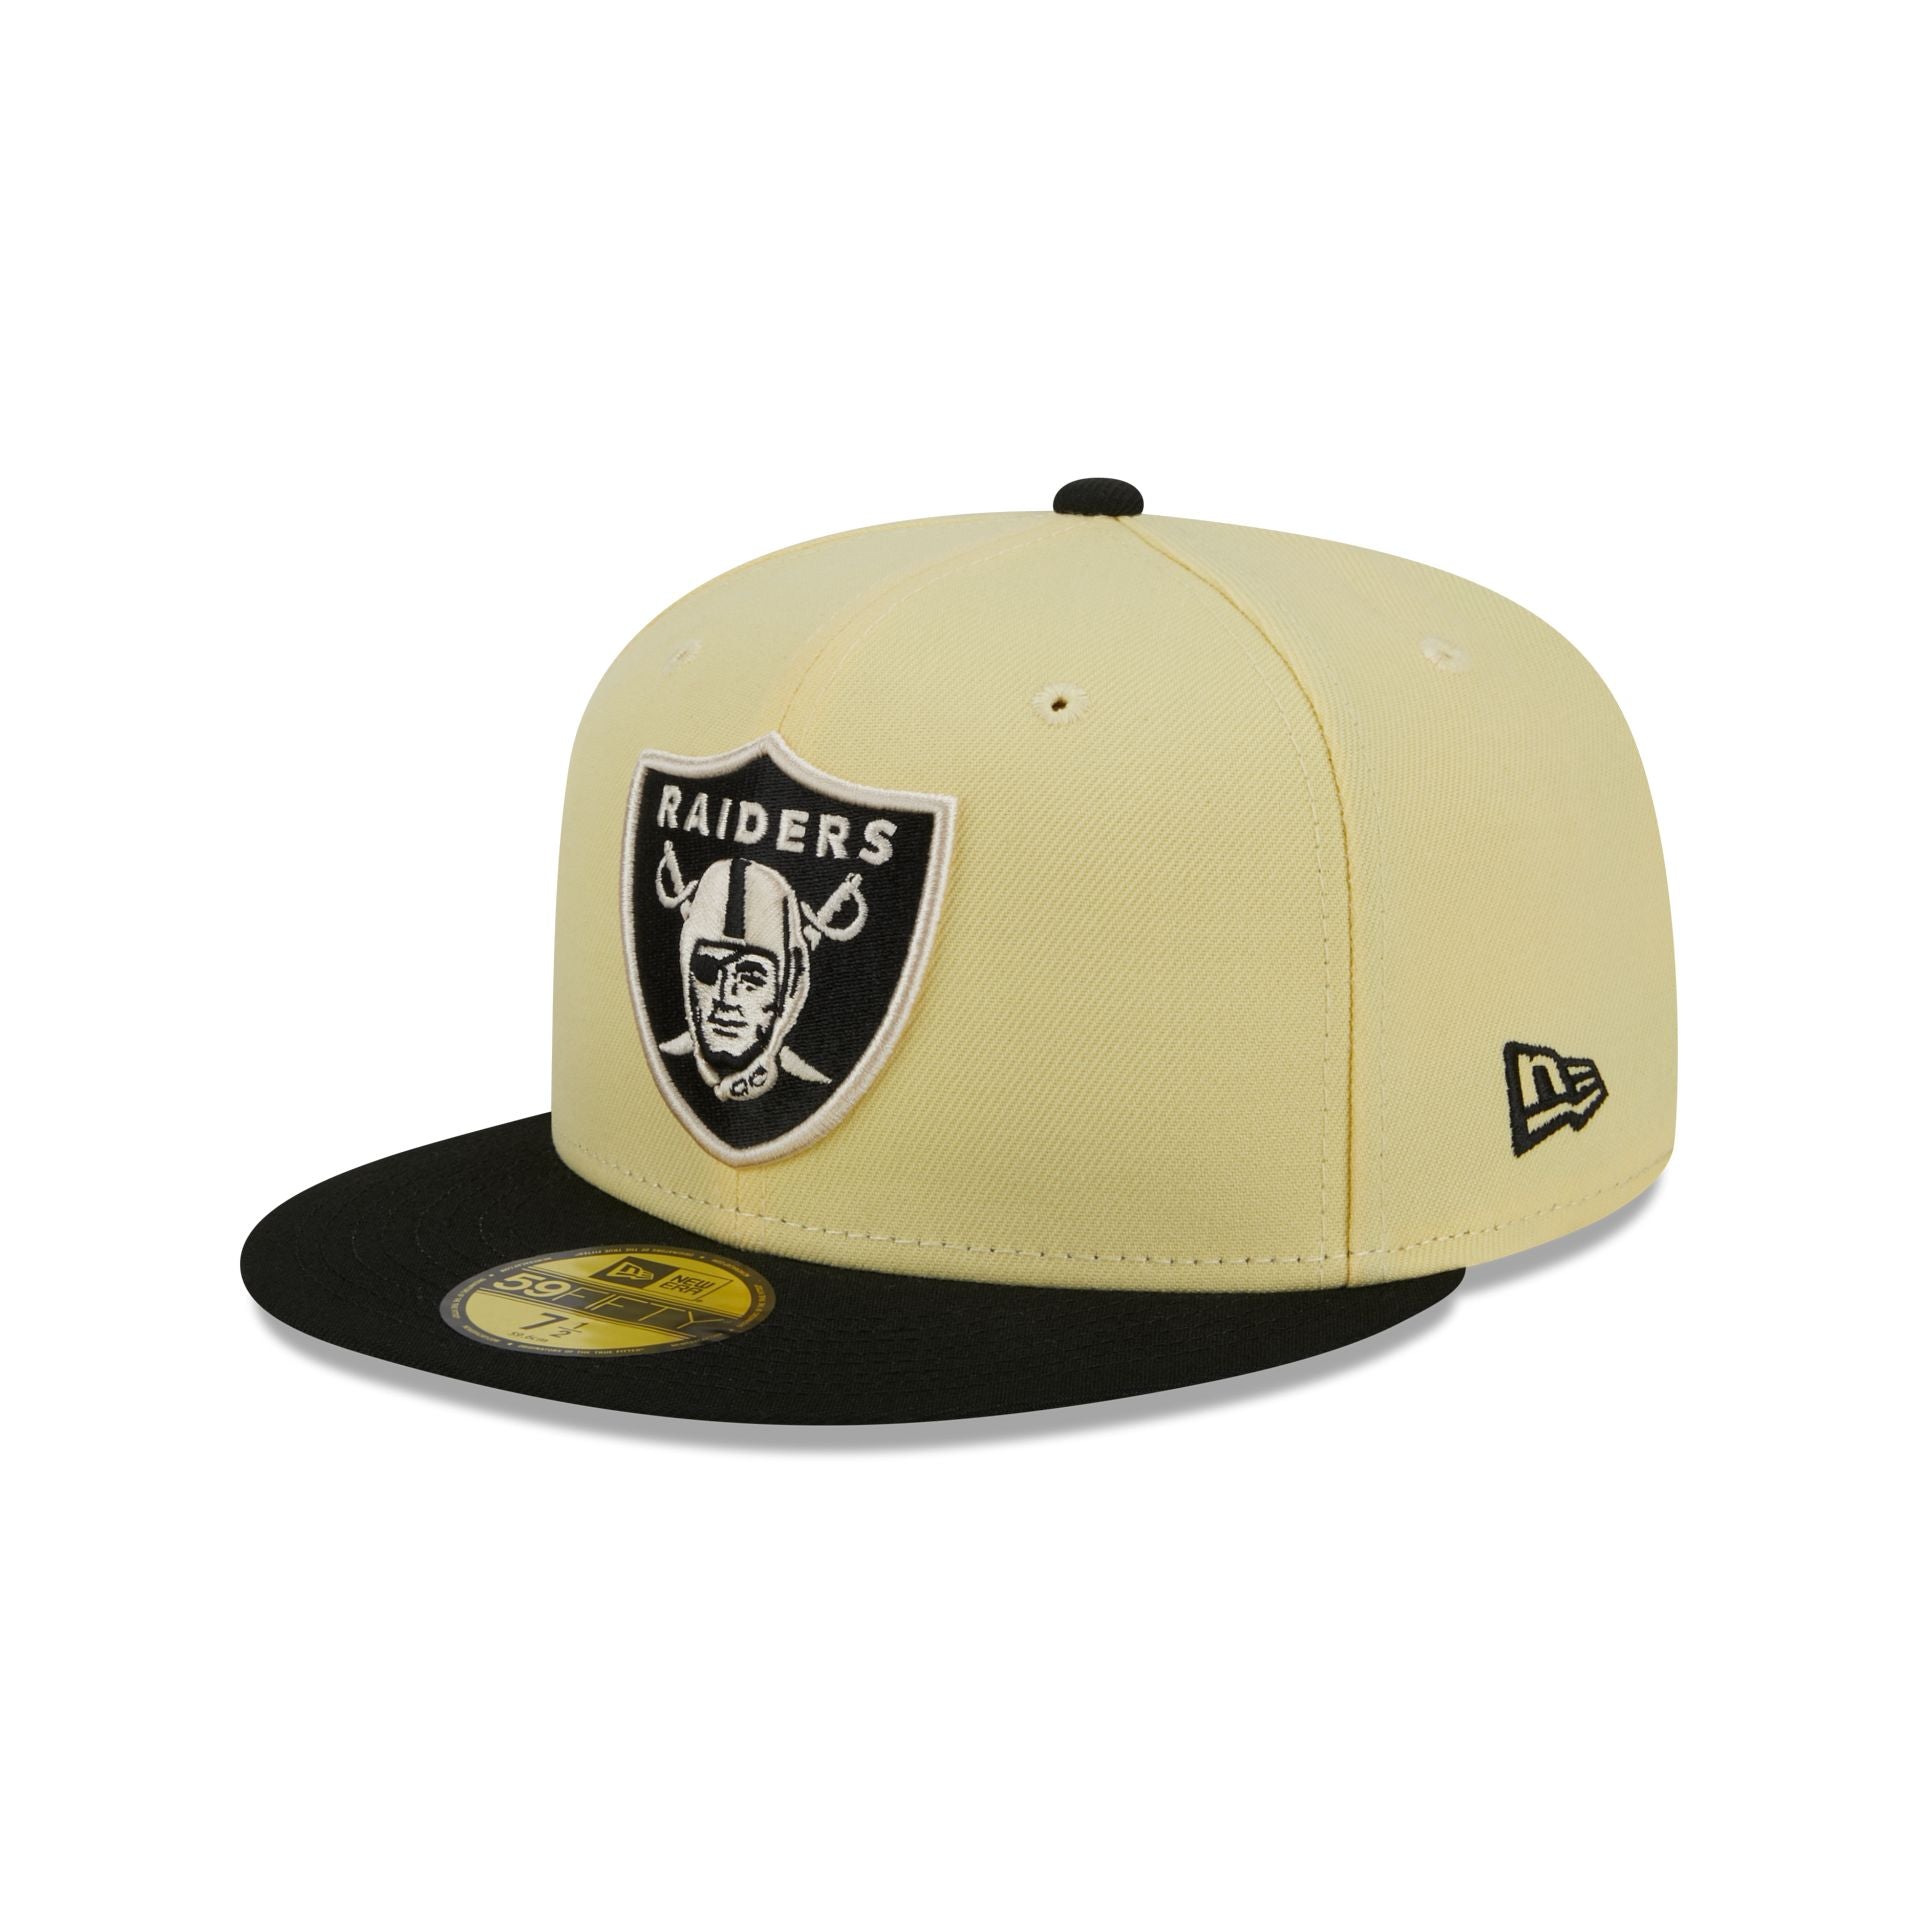 Raiders Snapback New Era 9FIFTY Yellow Logo Green Hat Cap Grey UV